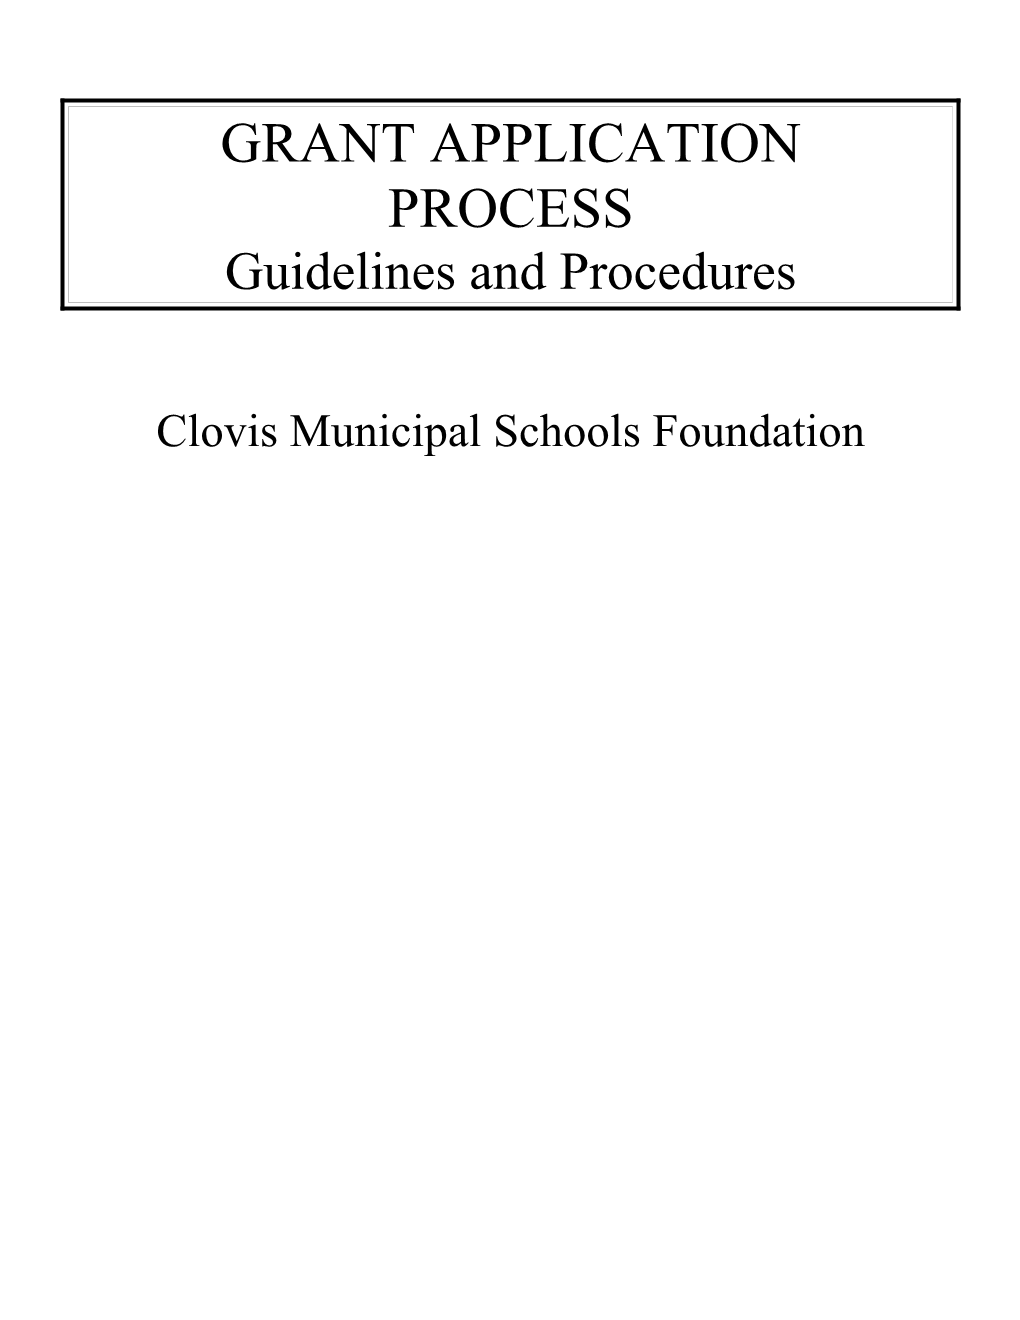 Clovis Municipal Schools Foundation